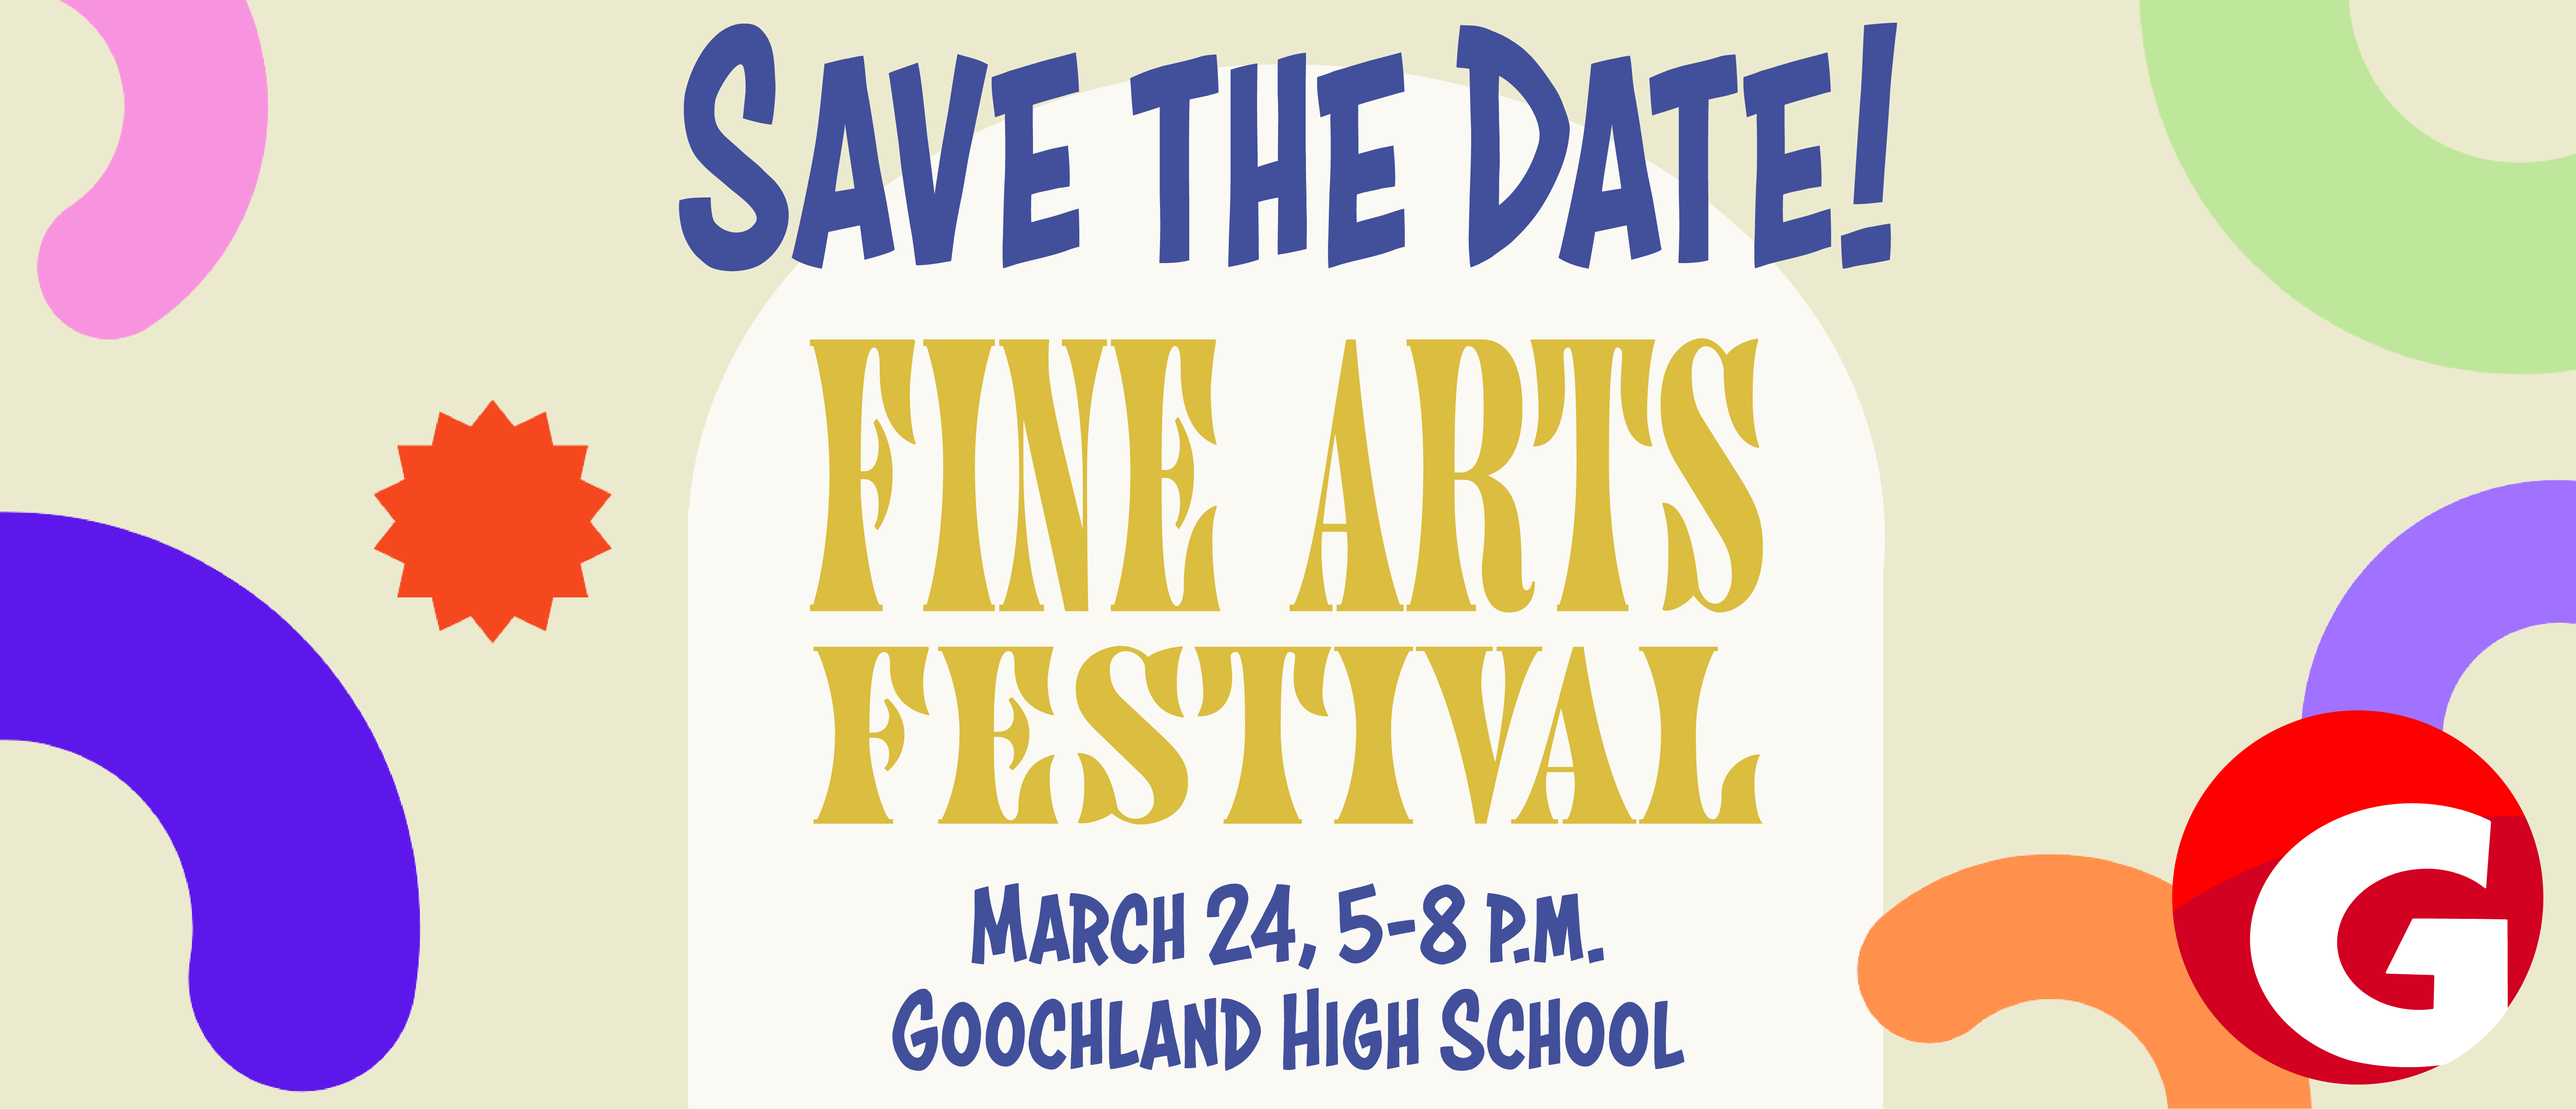 Save The Date! Fine Arts Festival March 24, 5-8PM. Goochland High School